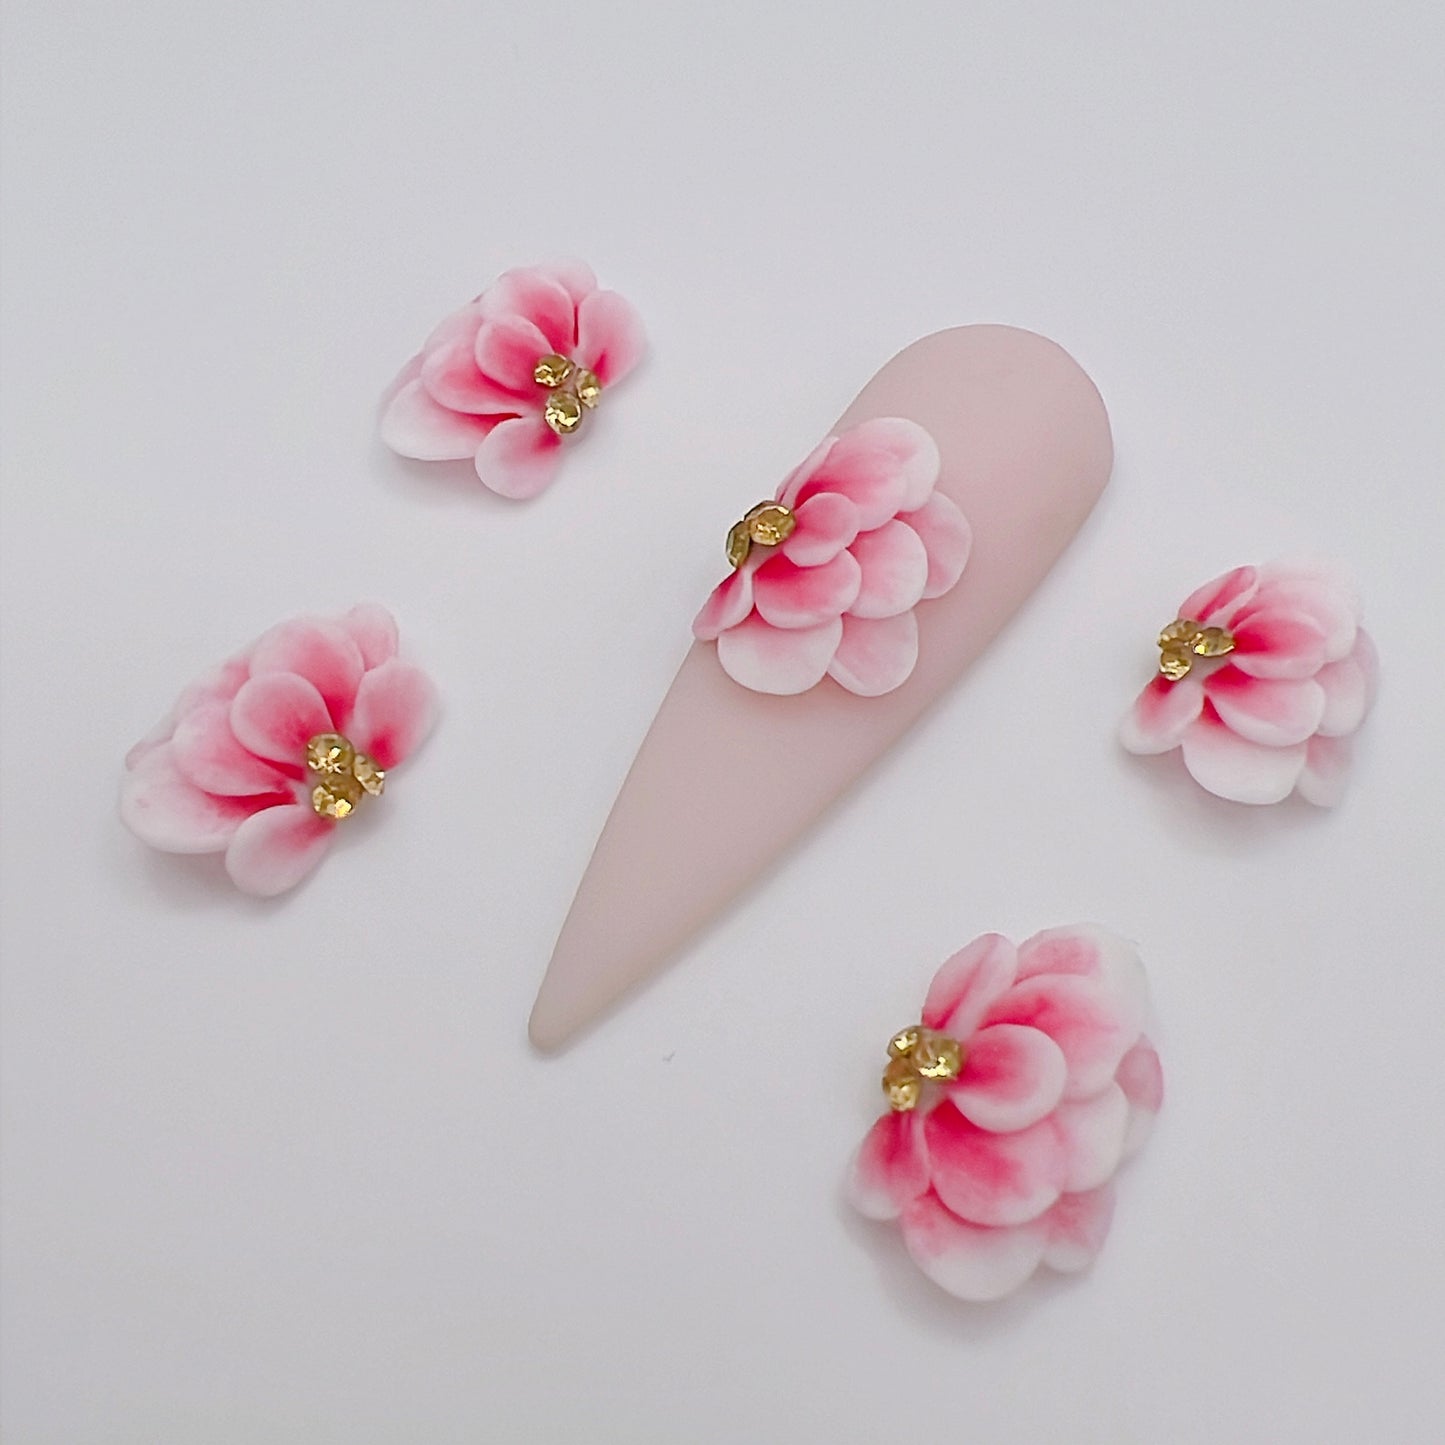 4pcs PINK 3D Acrylic Nail Flowers